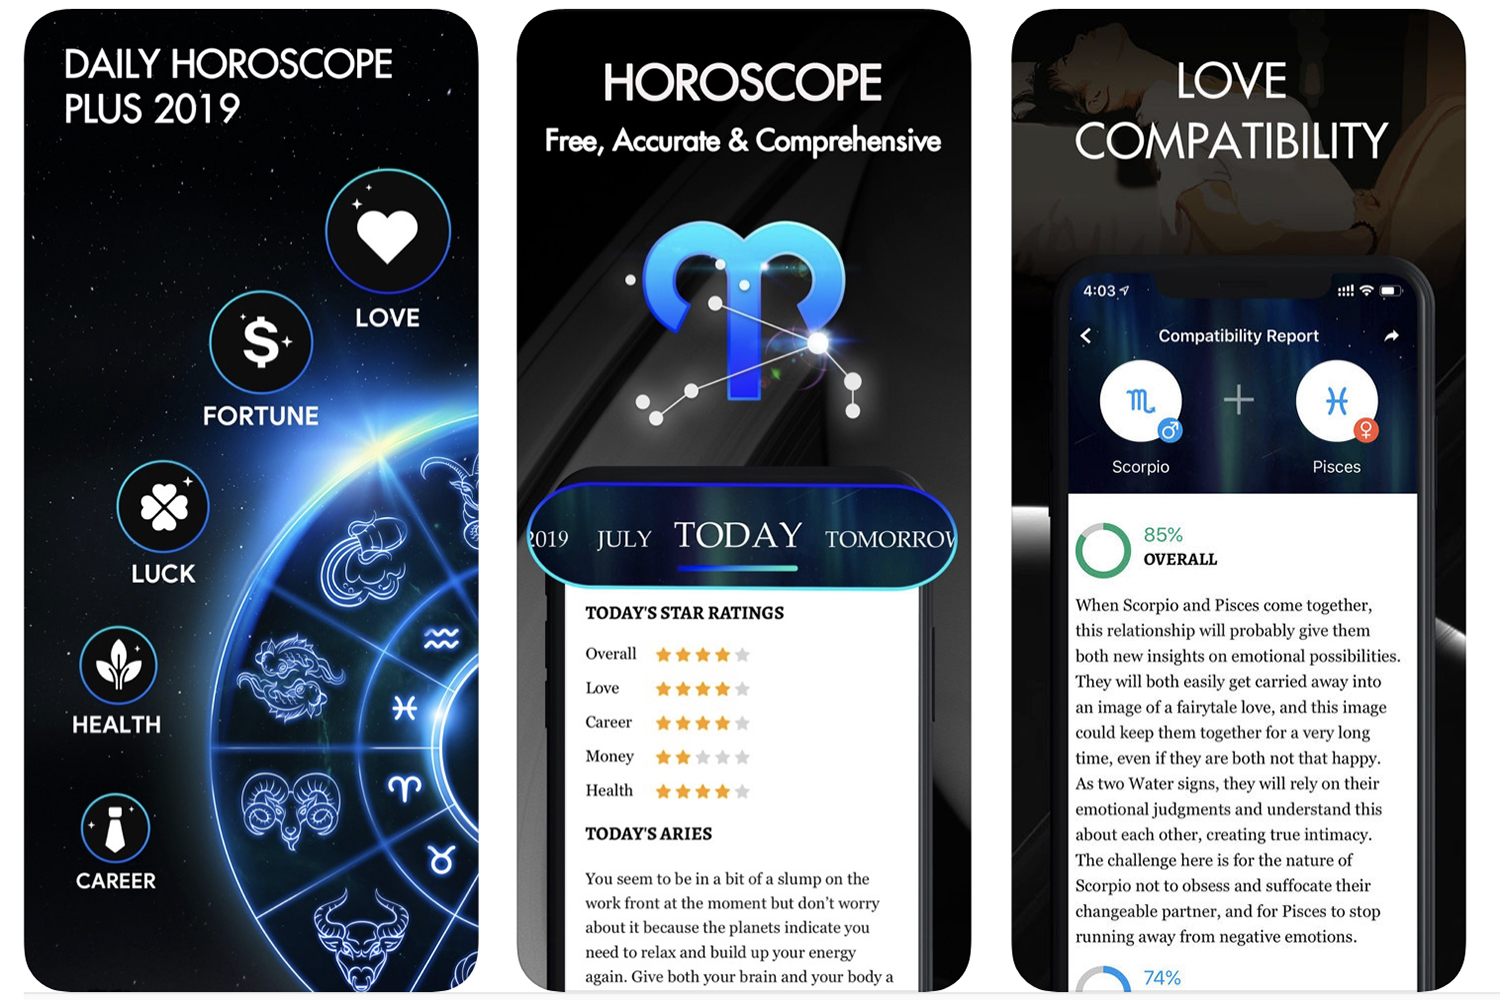 Daily Horoscope Plus 2019